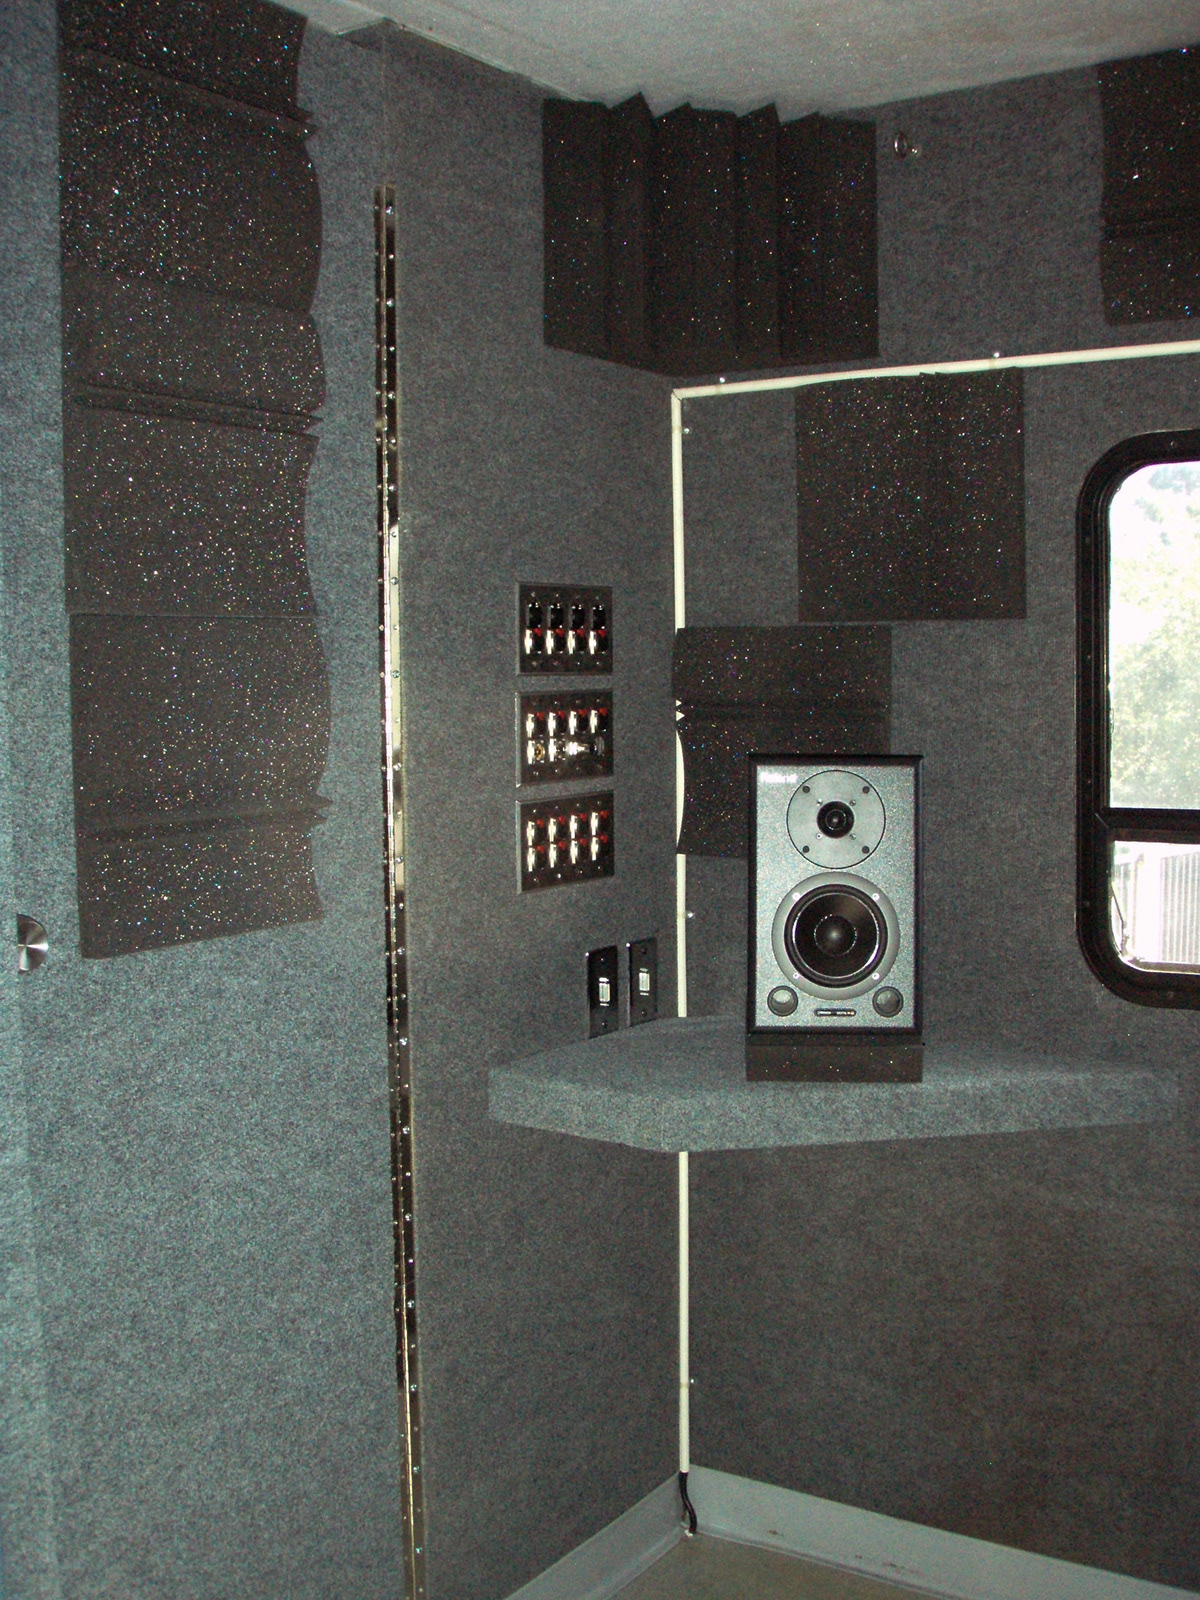 studio design conversion RV construction soundproof acoustic portable touring Production beats samples mobile surround sound 5.1